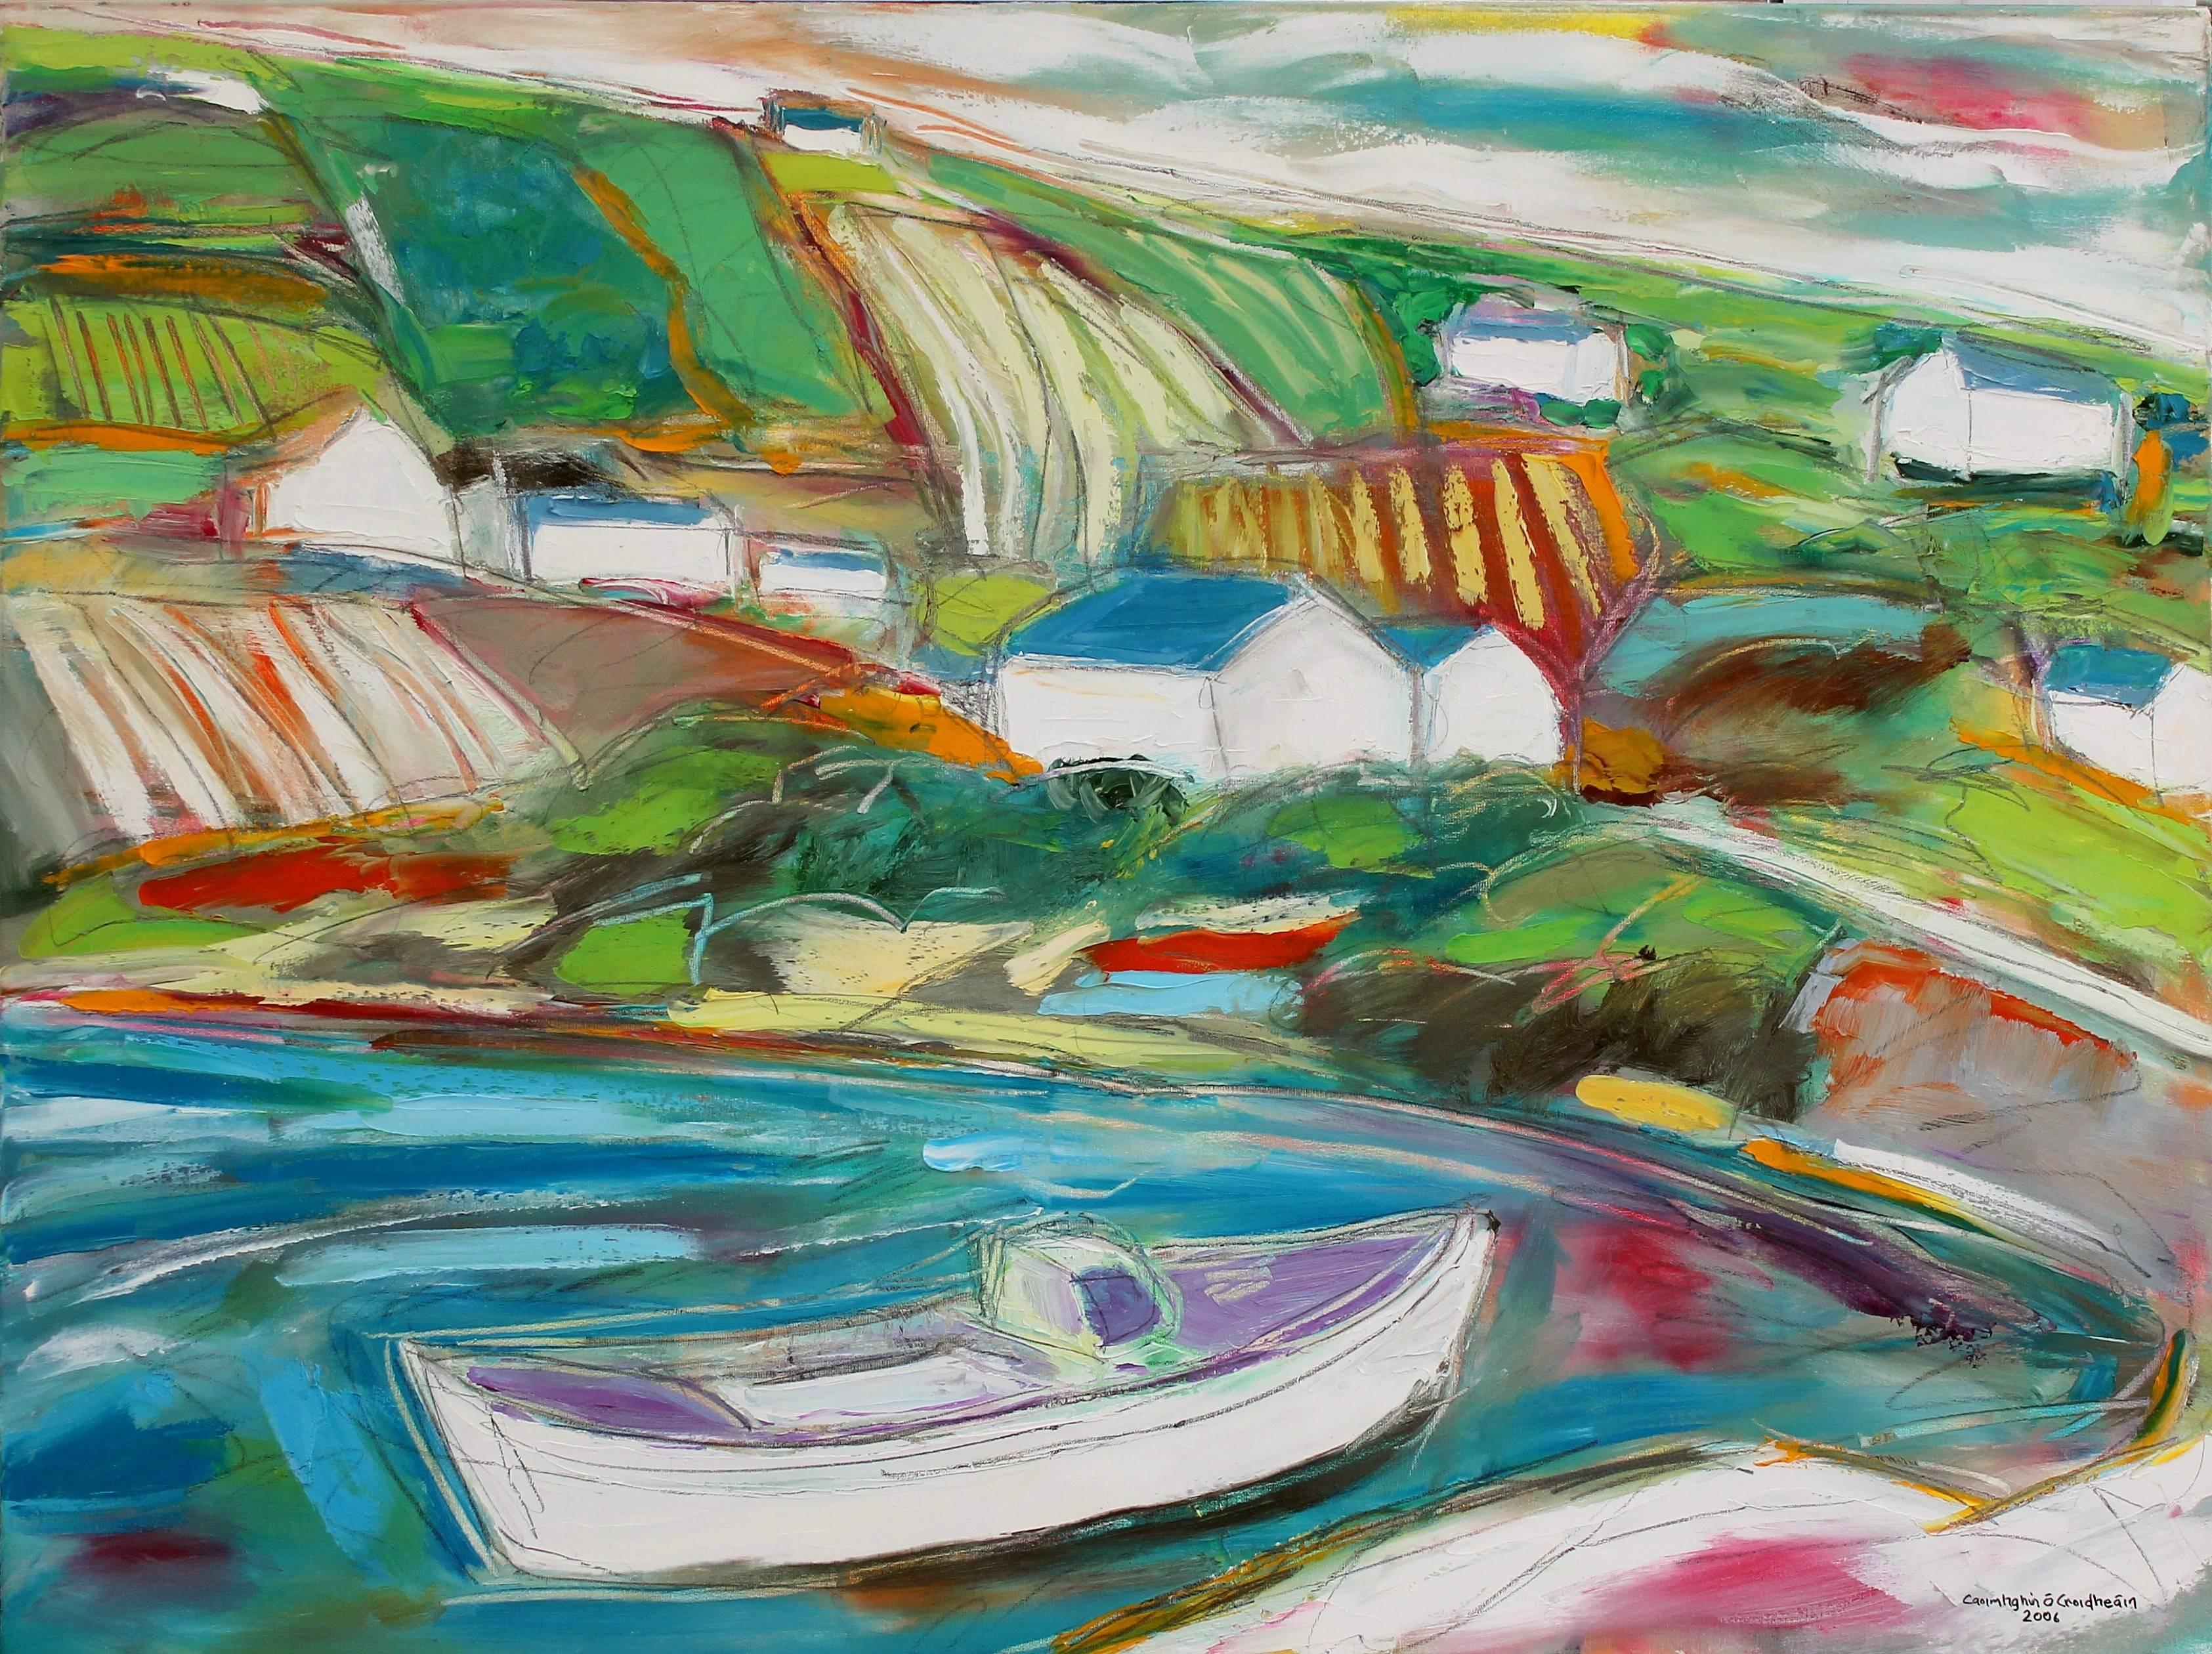 Caoimhghin Ó Croidheáin Landscape Painting – Der schmale Hafen von Aranmore Island, Co Donegal, Ölgemälde auf Leinwand